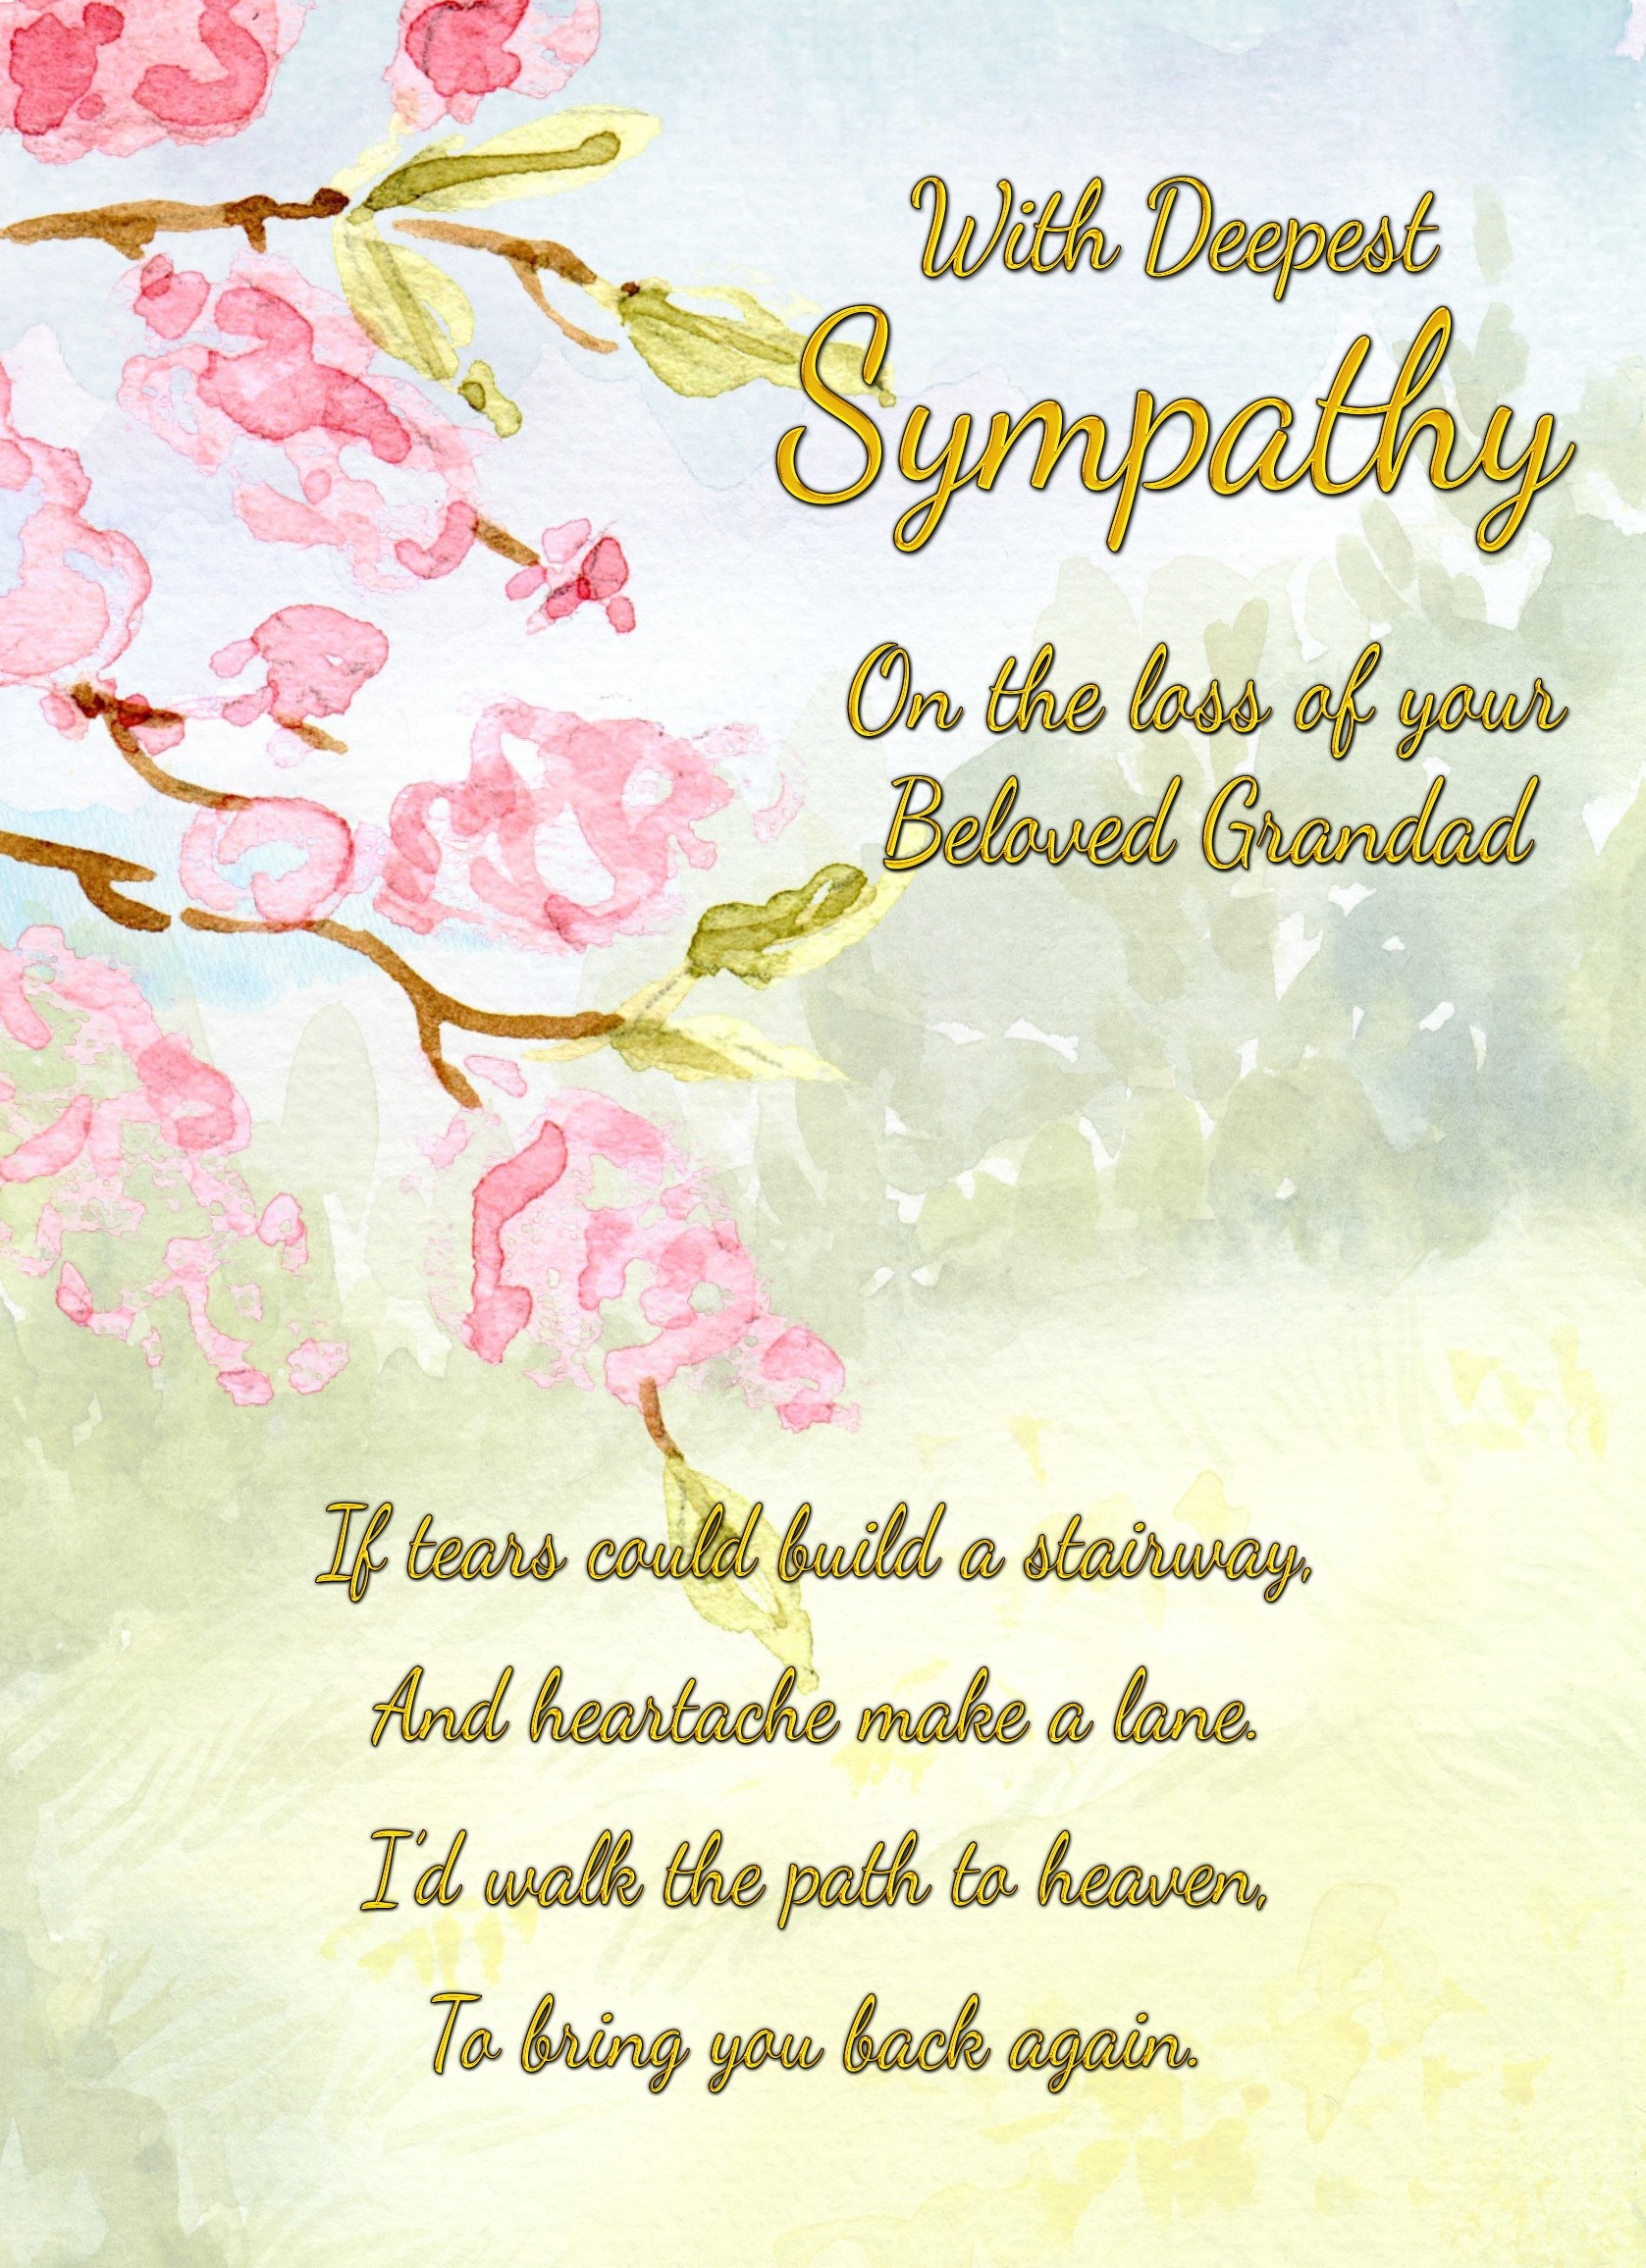 Sympathy Bereavement Card (With Deepest Sympathy, Beloved Grandad)